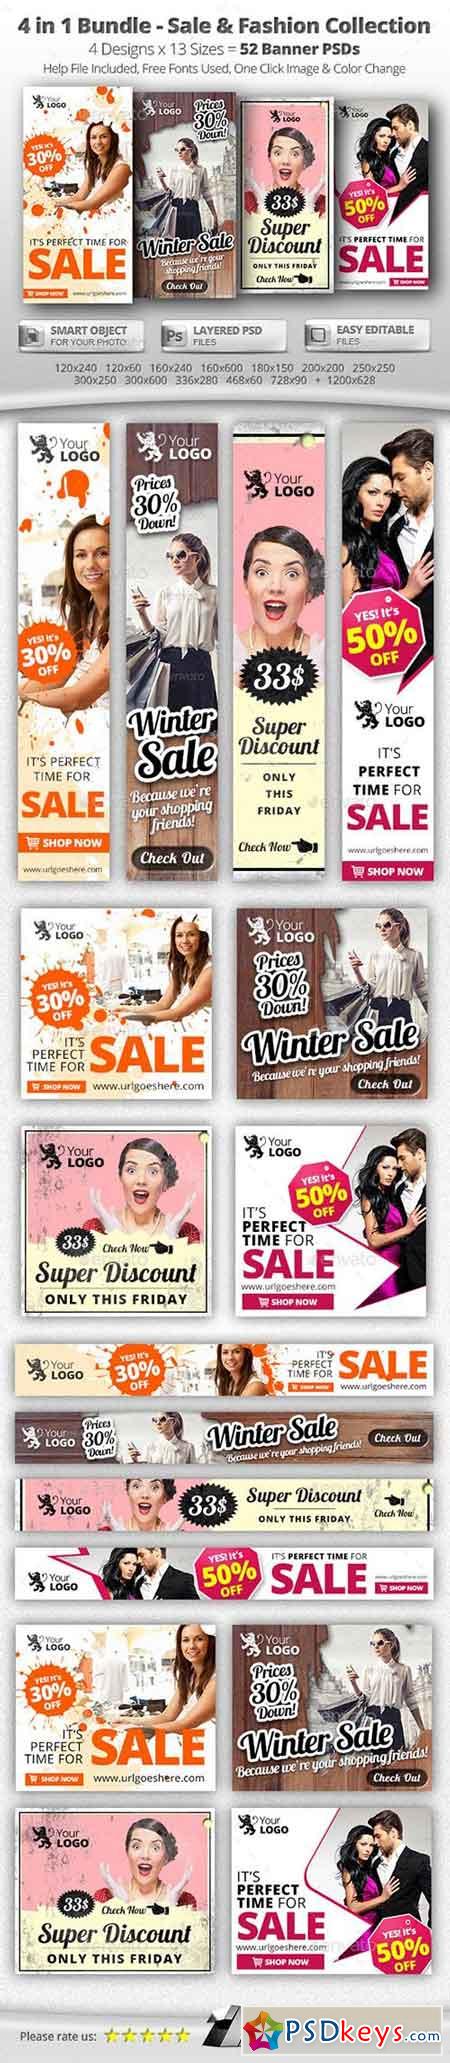 52 Sale & Fashion Web Banners - 4 in 1 Bundle 12014566